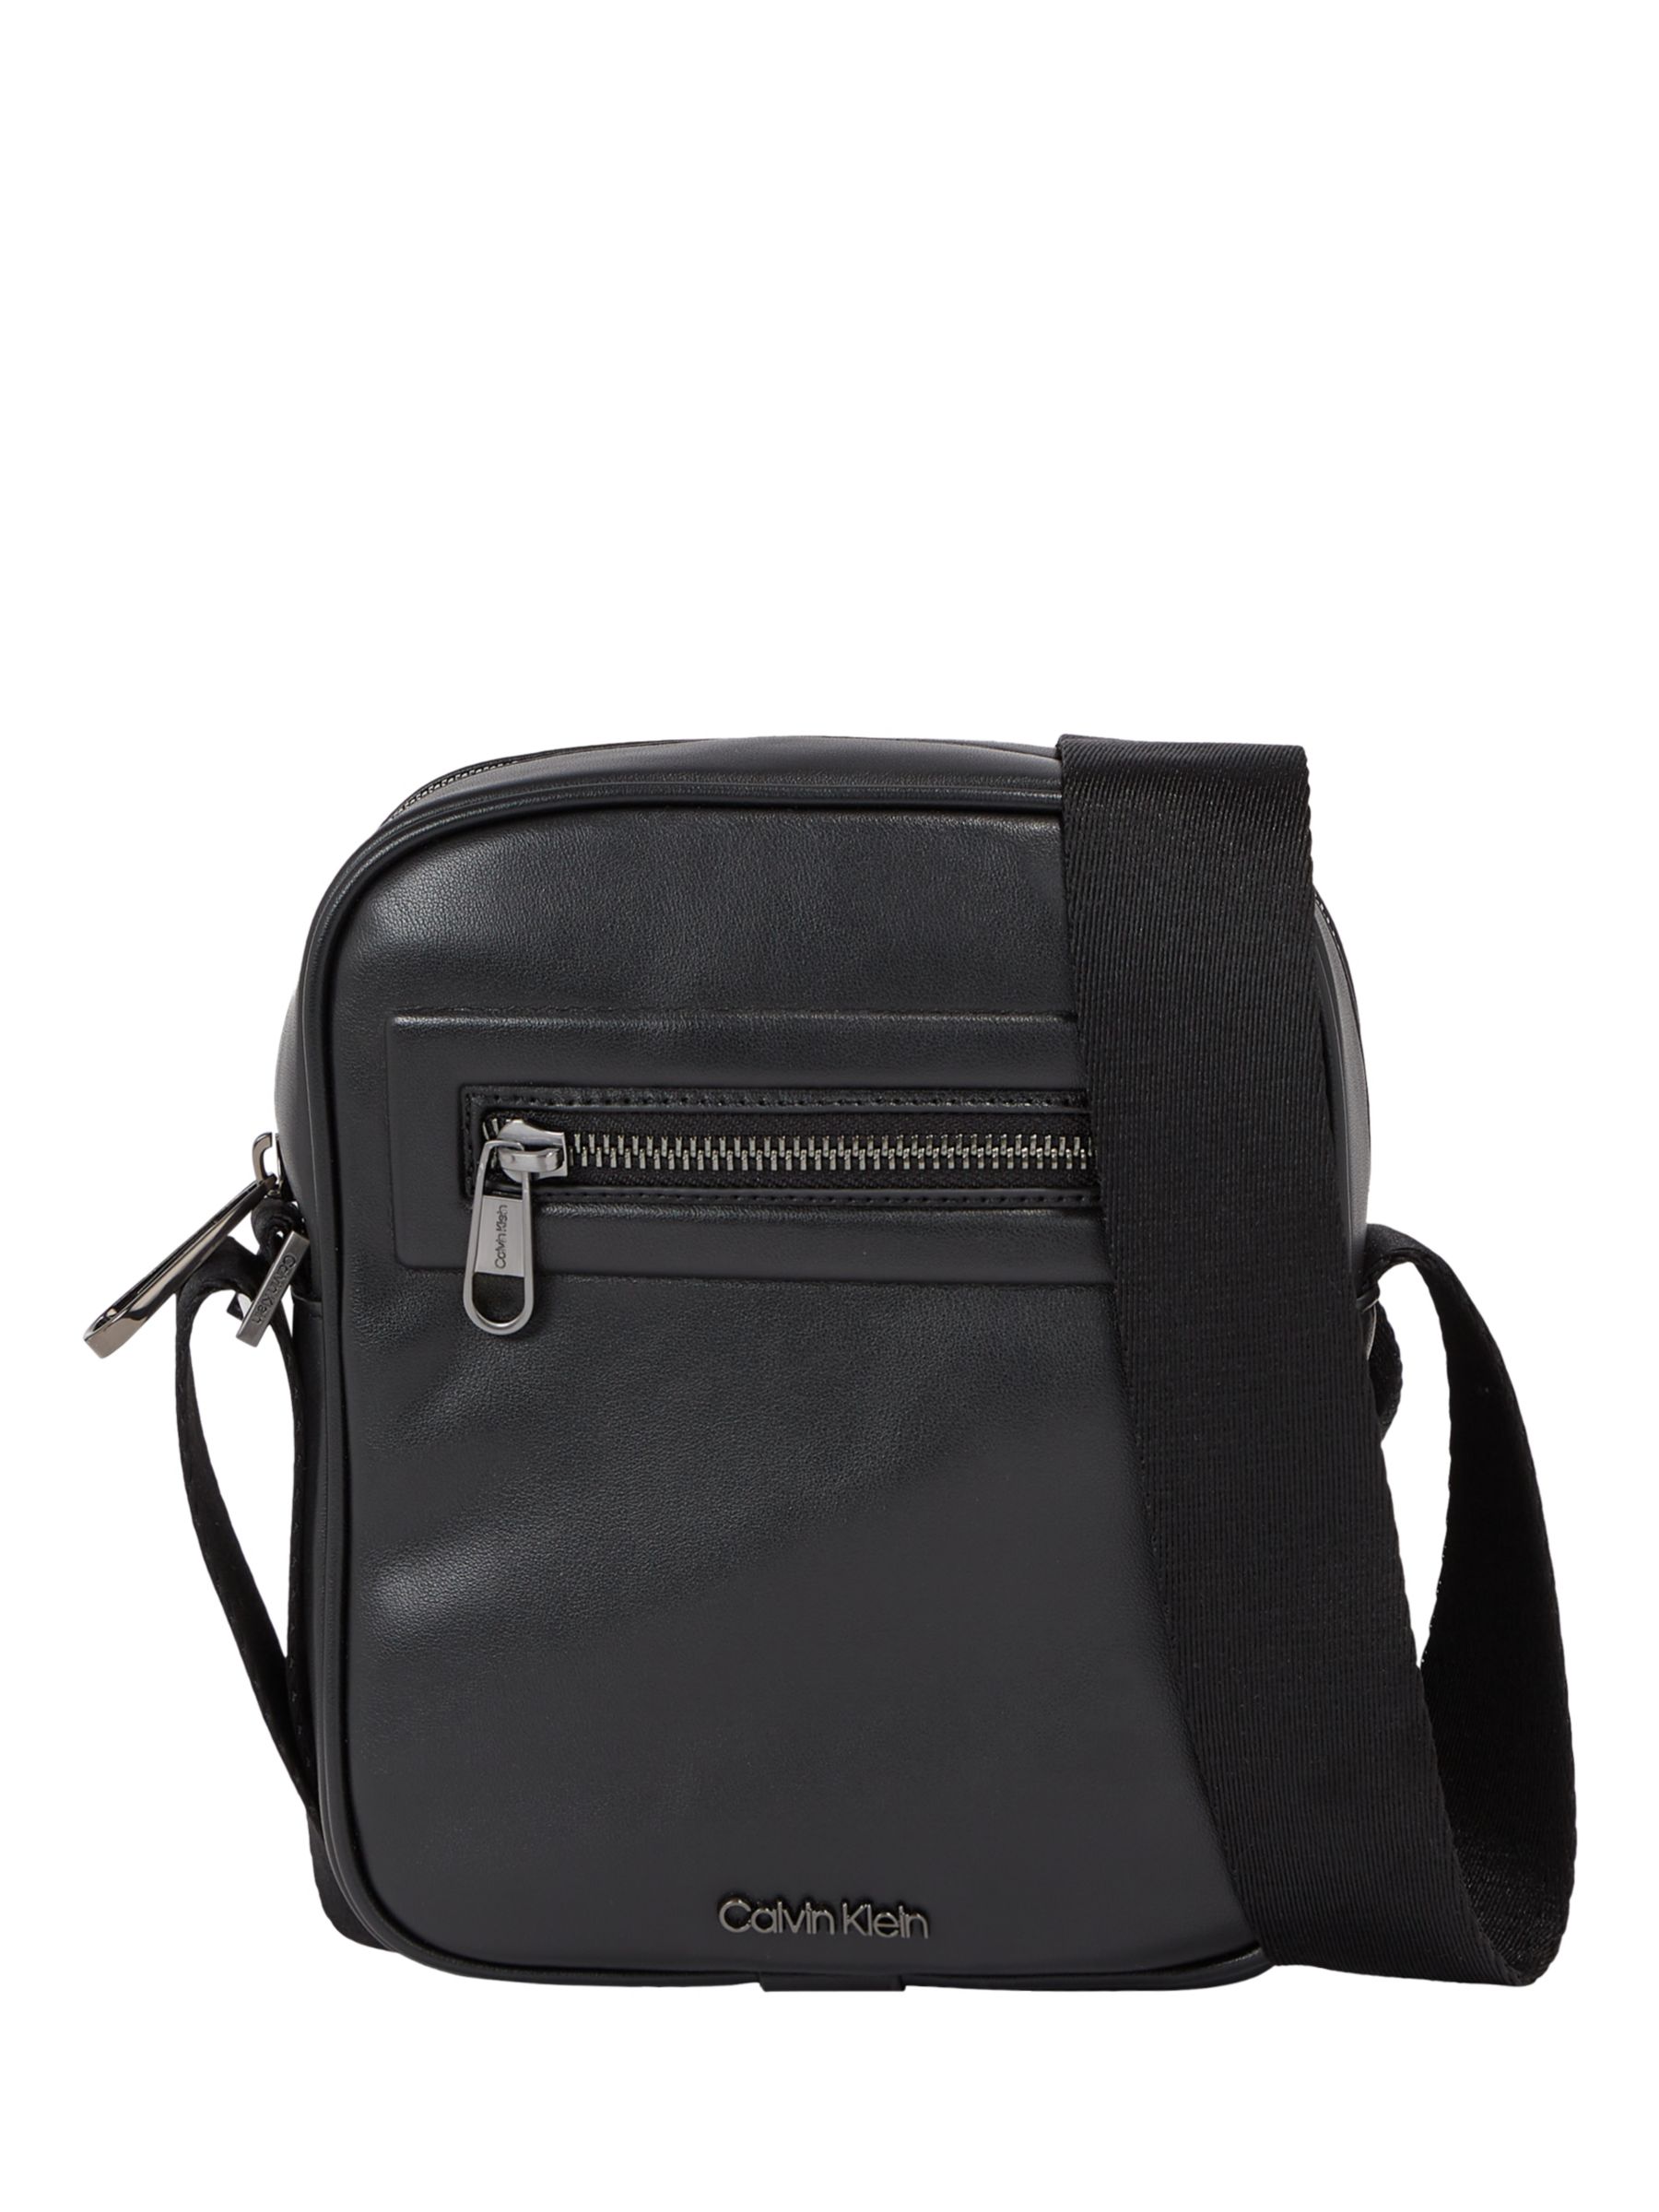 Calvin Klein Elevated Reporter Bag, Black Smooth at John Lewis & Partners